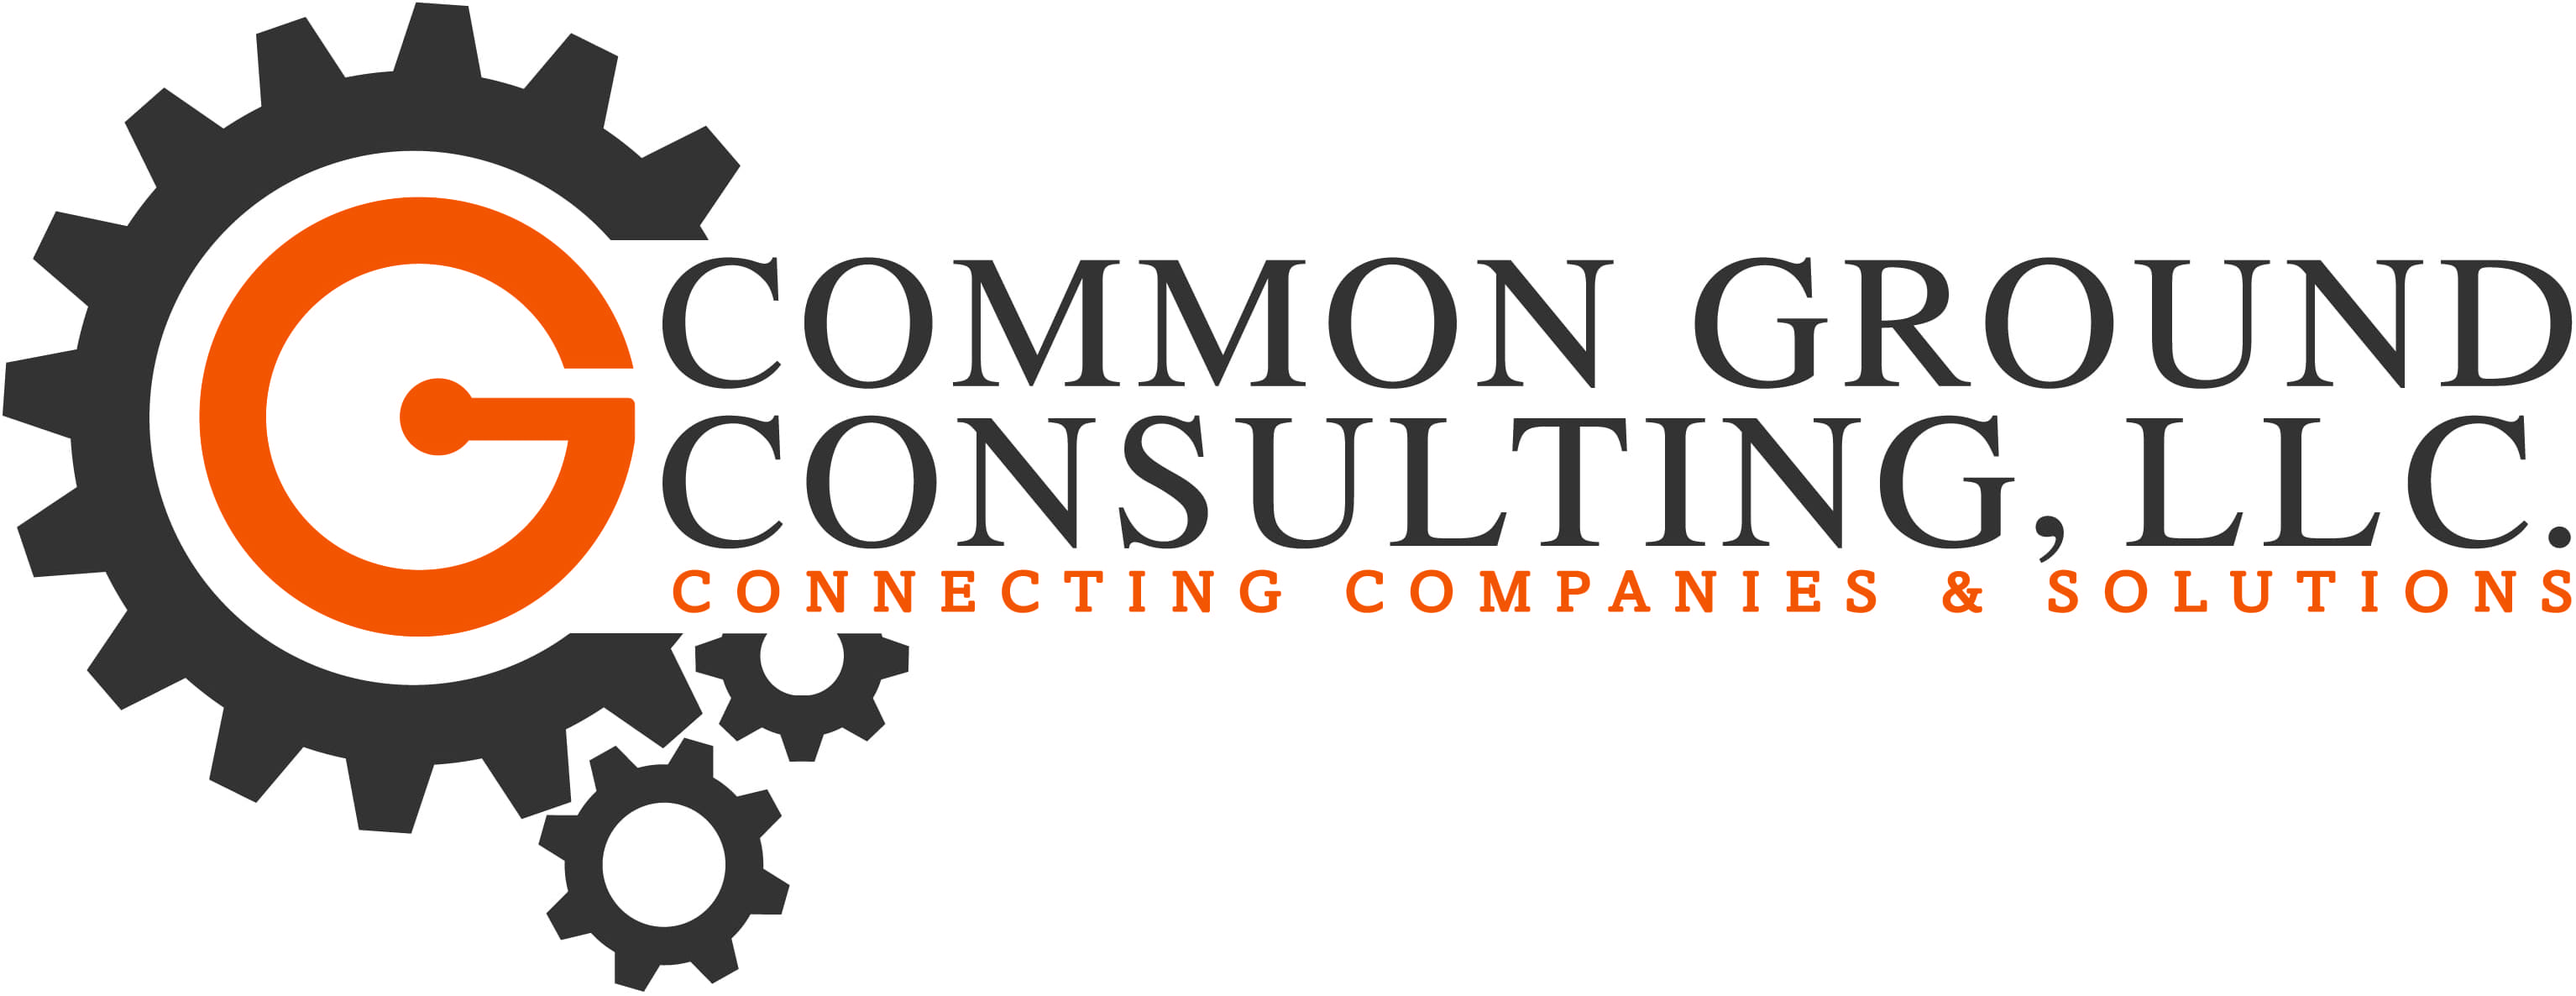 orter_logos/cgc company logo